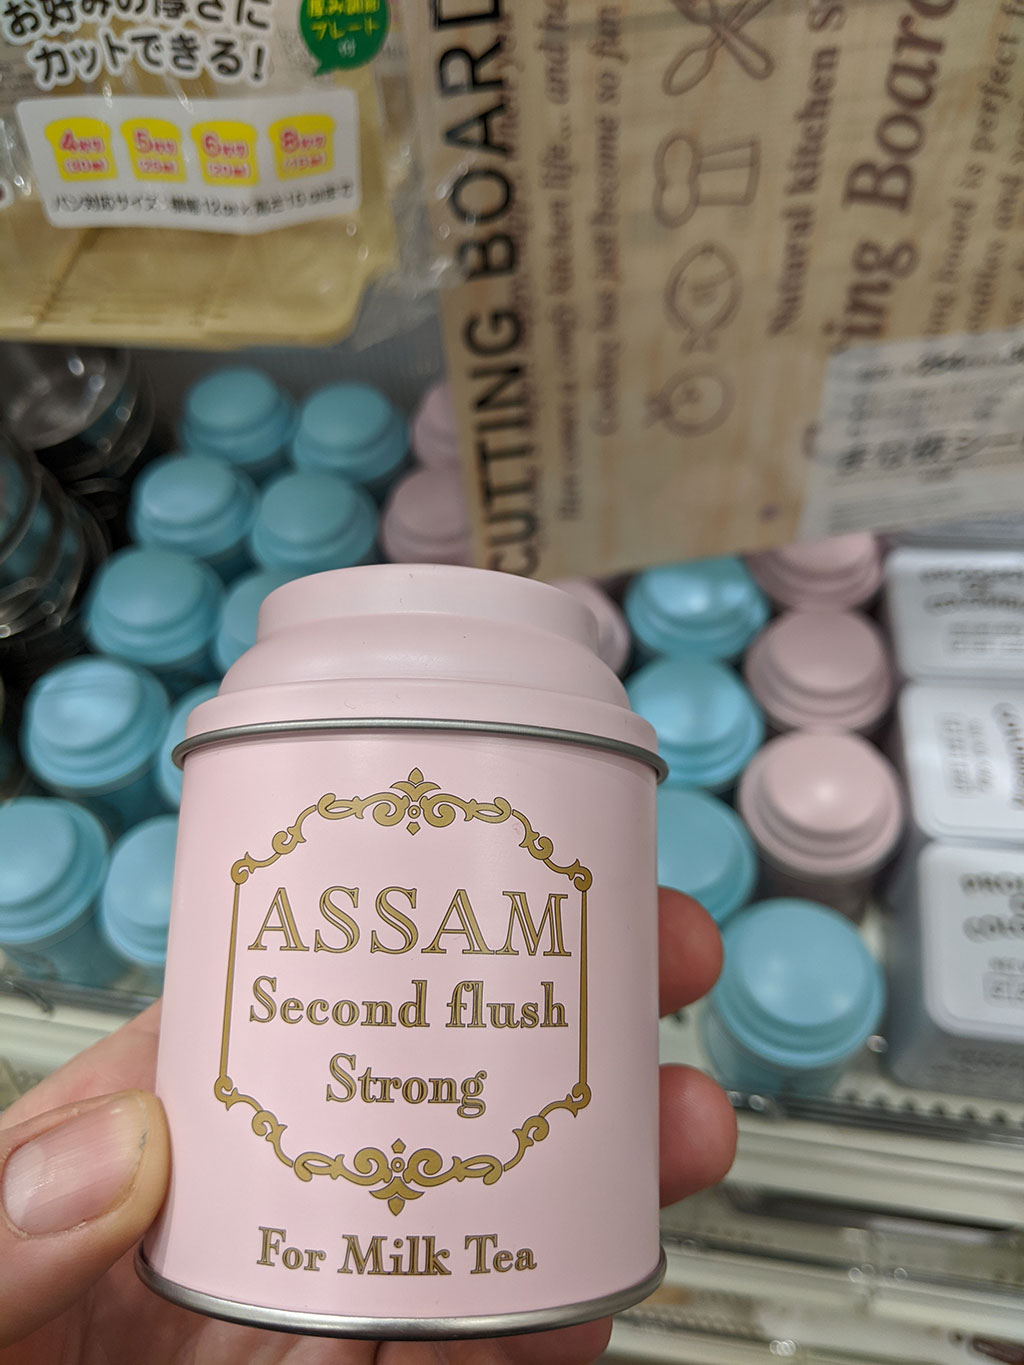 Oomomo Calgary Assam second flush strong for milk tea